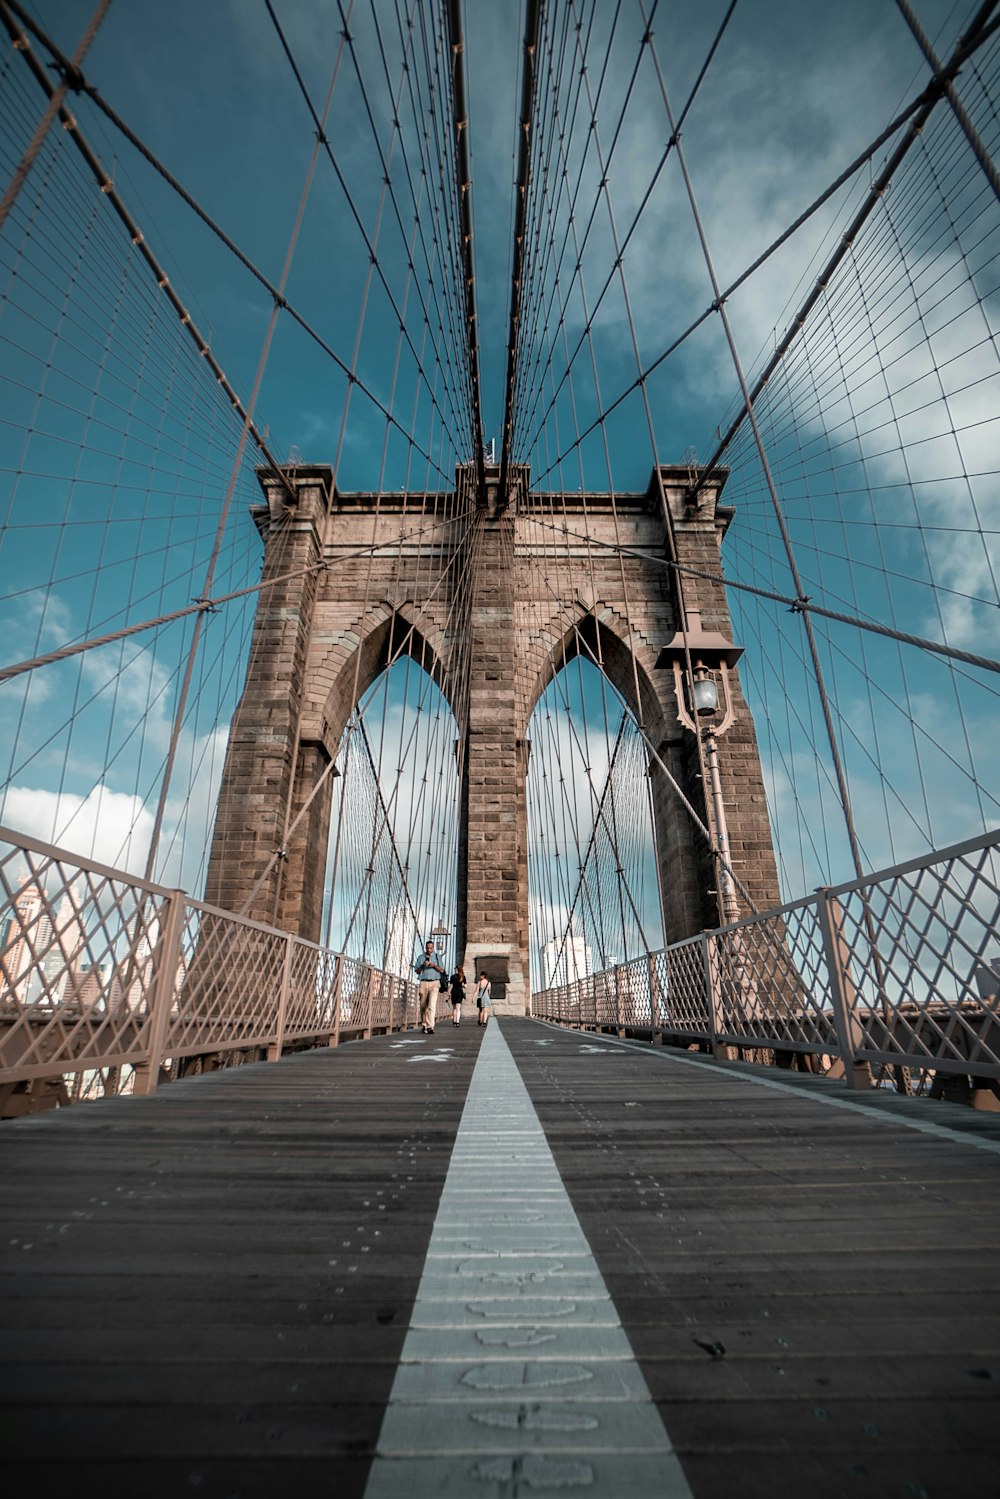 500 Brooklyn Bridge Pictures Download Free Images On Unsplash